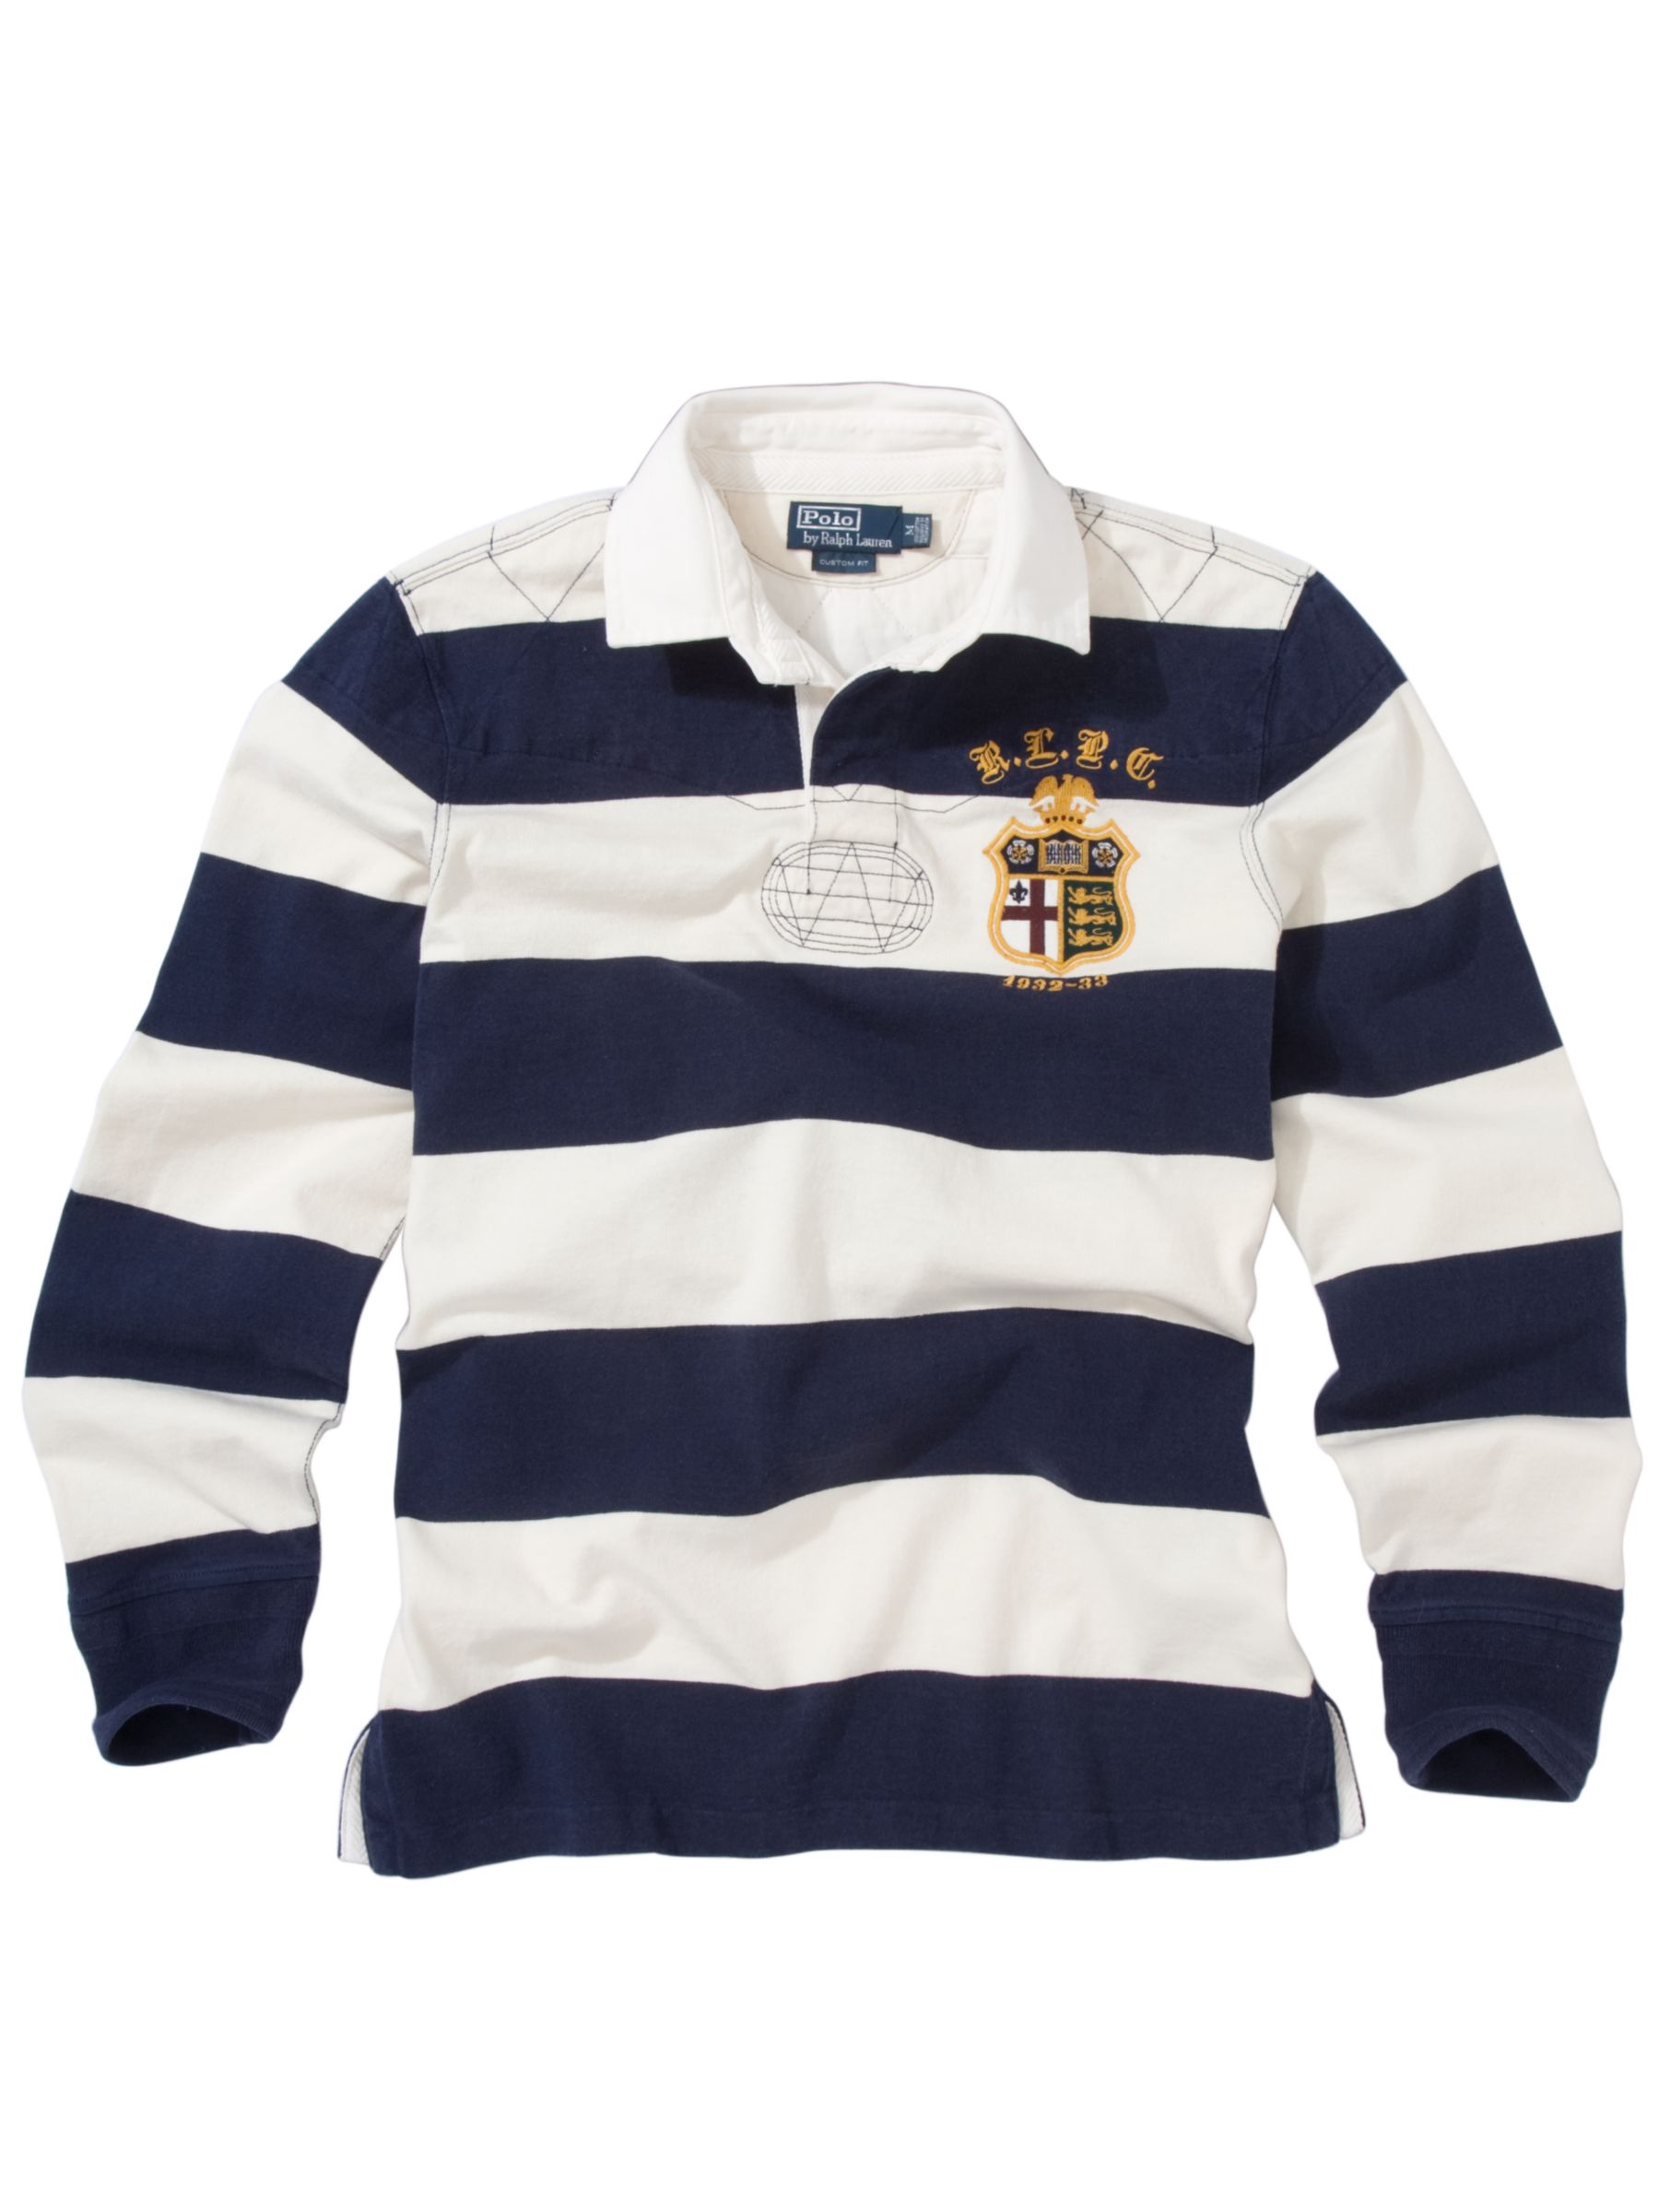 Classic Rugby Shirt, Navy/cream